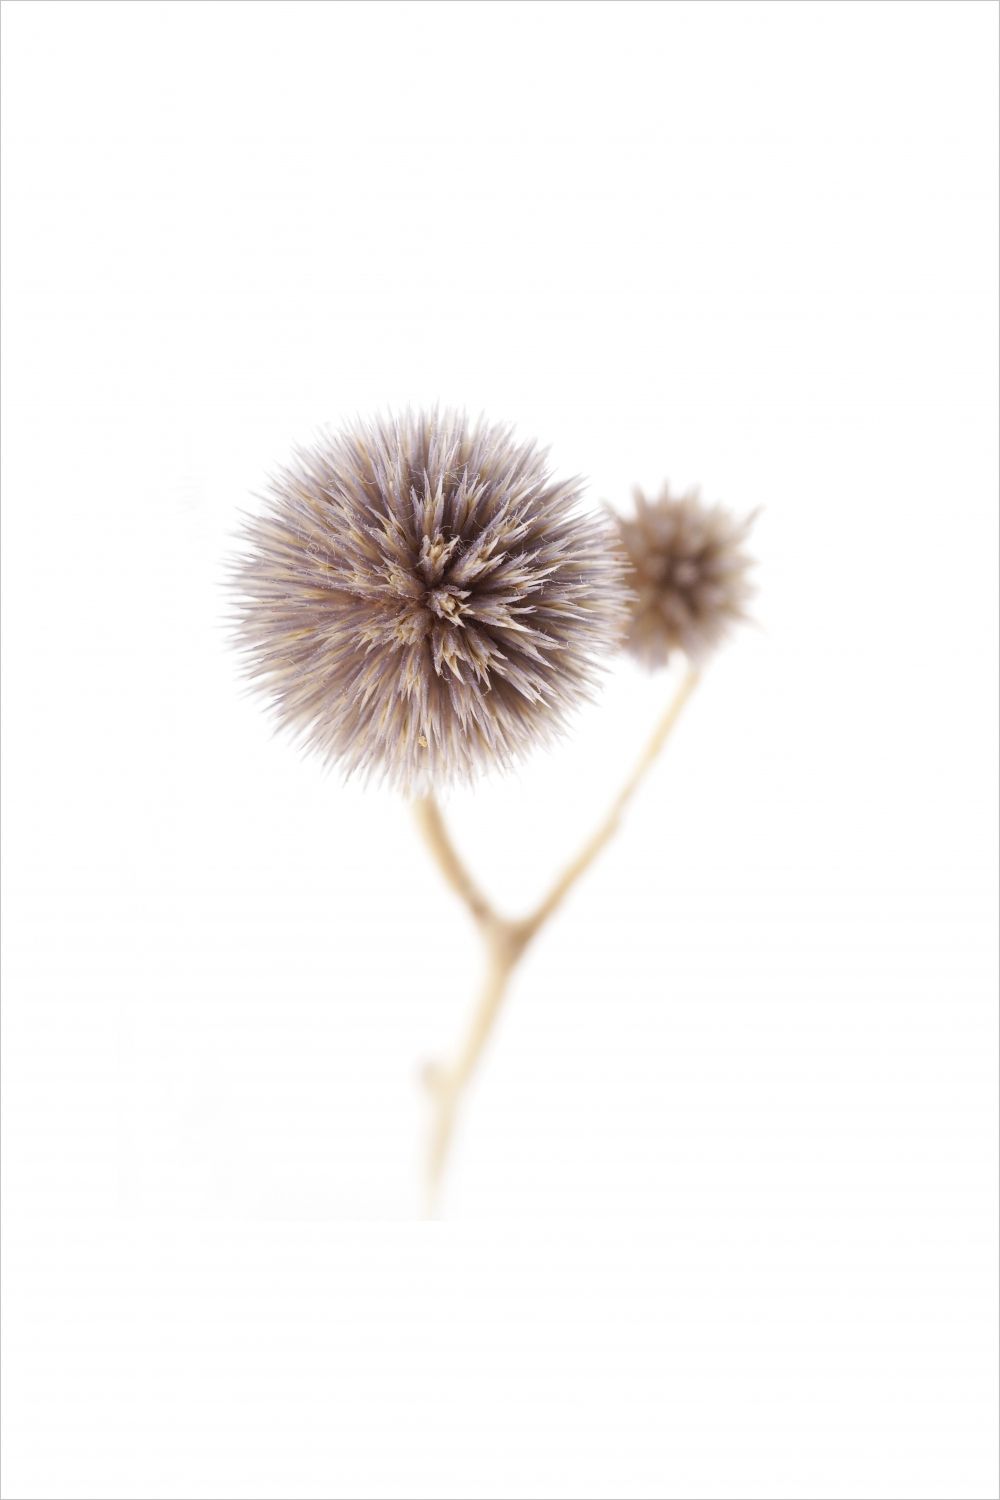 Постер "Колючий цветок" Черный, Белый, Дерево A4 [21×30] , A3 [30x40], A2 [40x60], A1 [60x80]